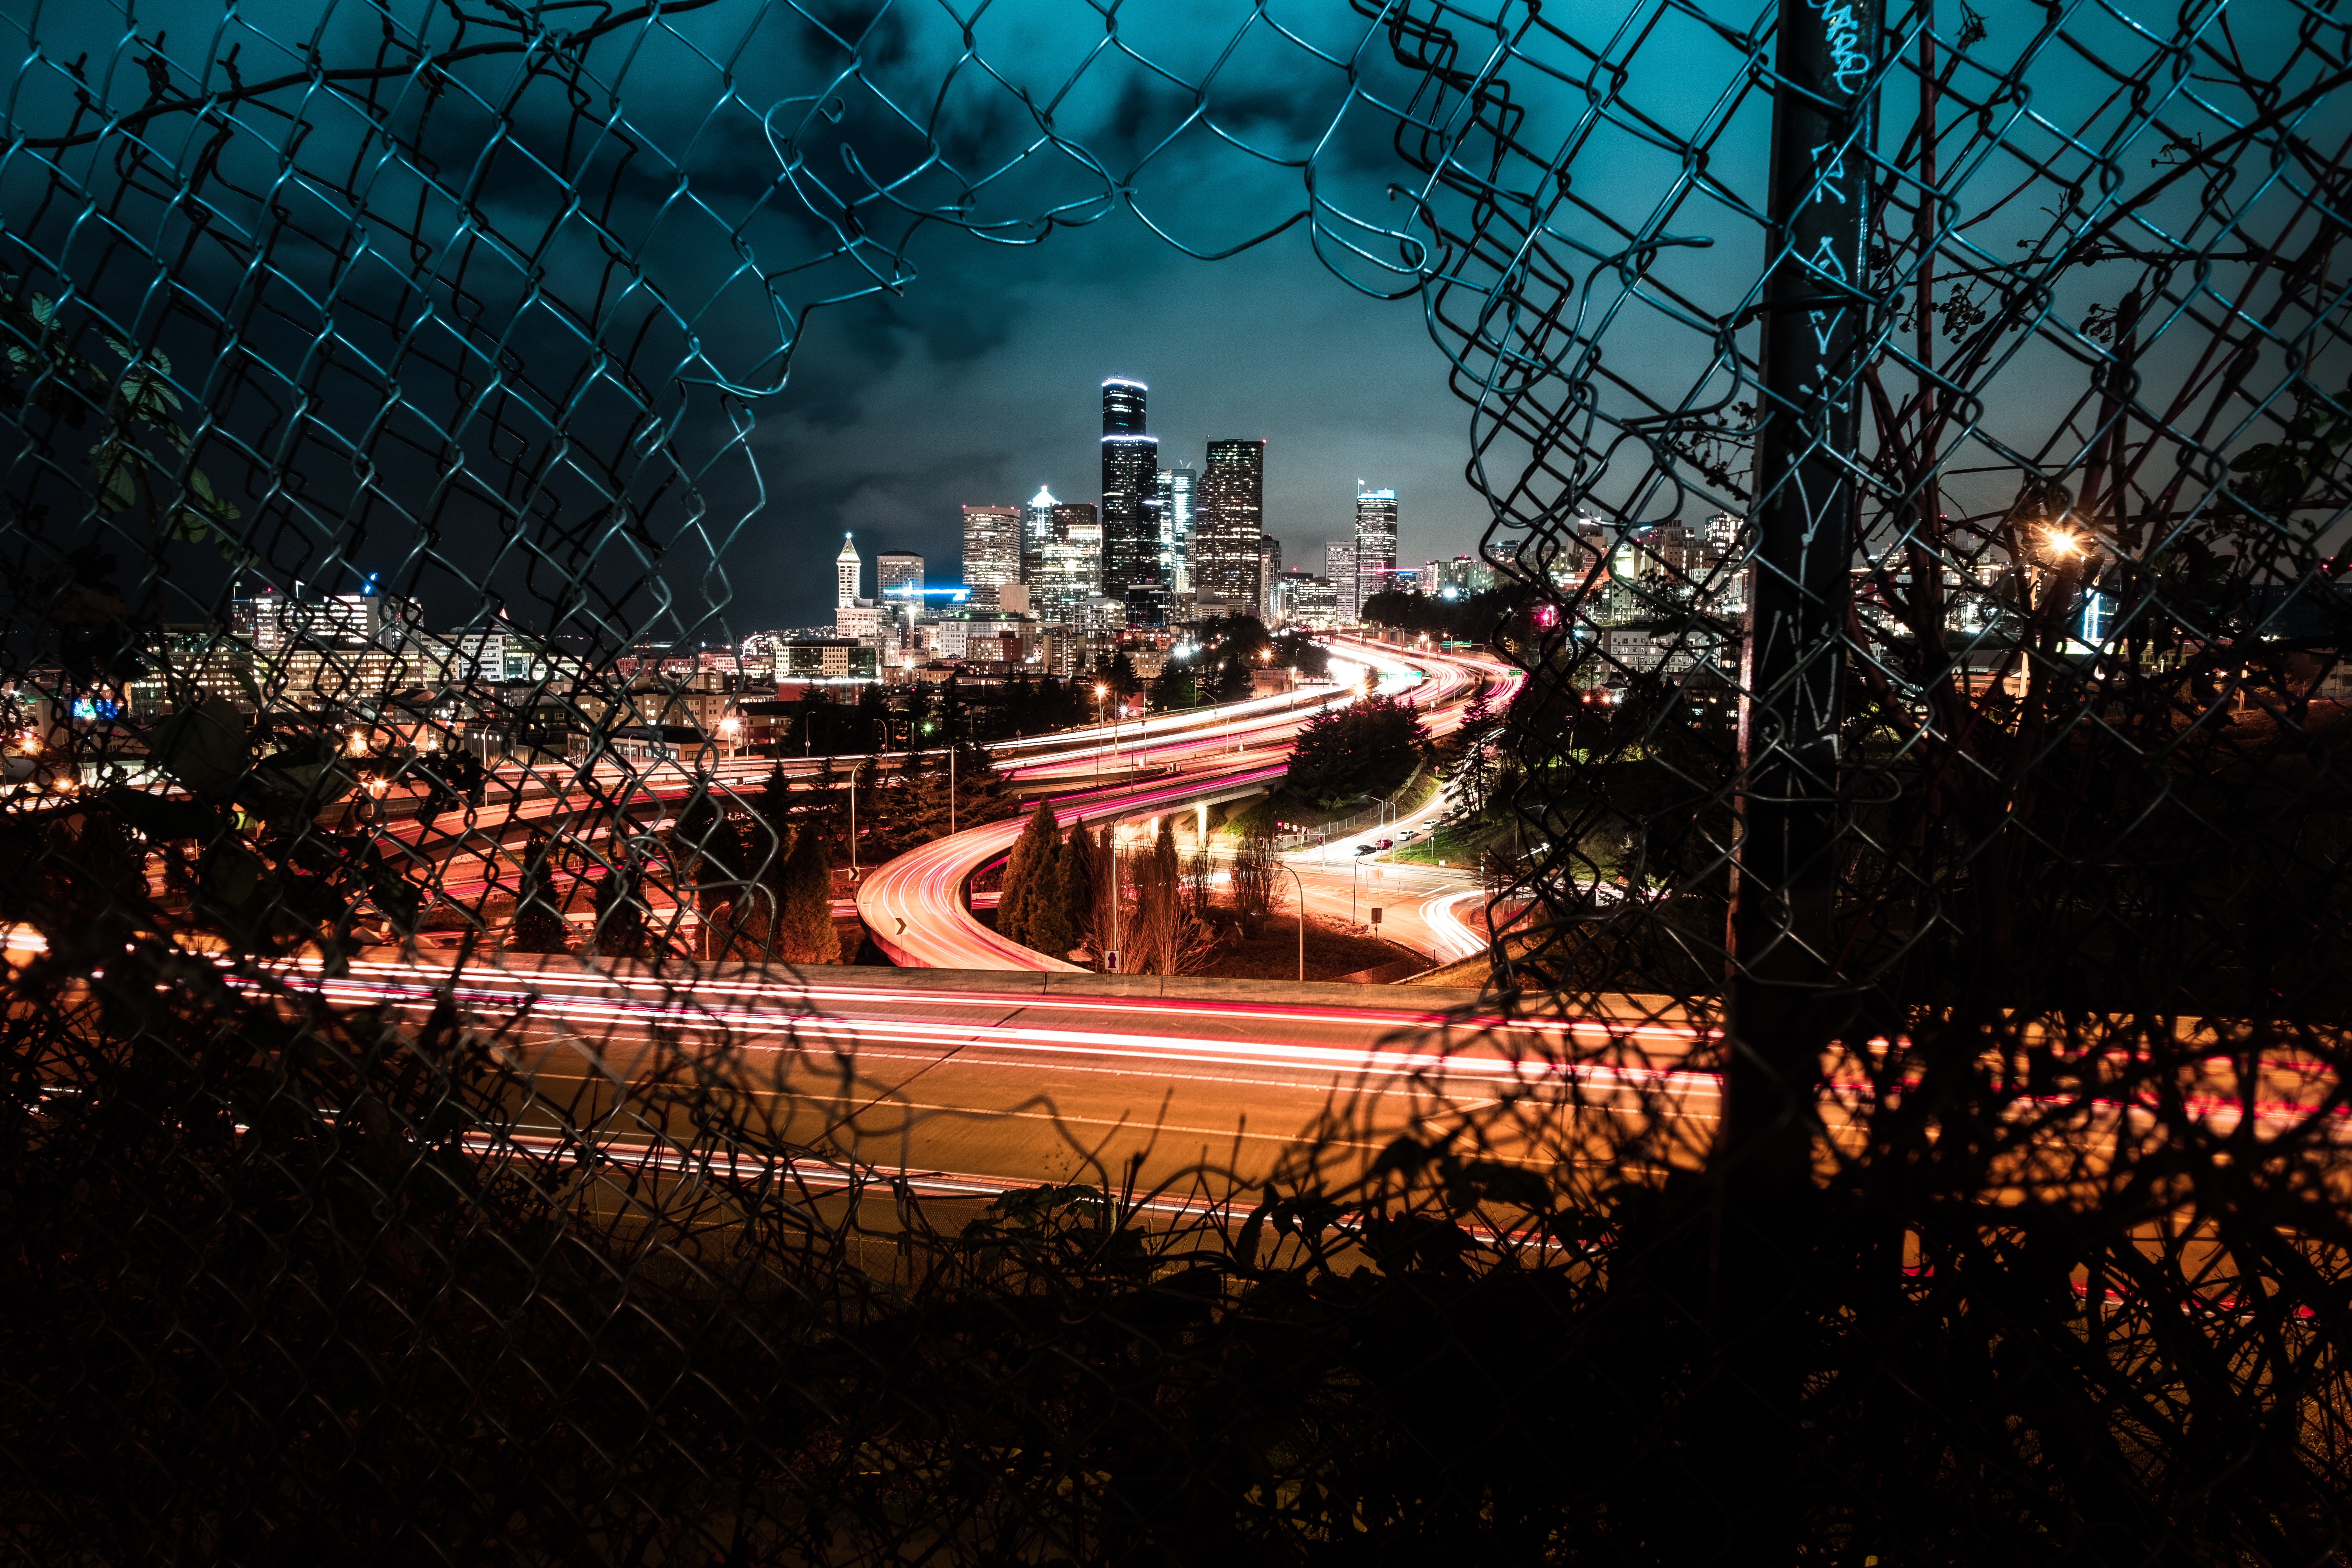 Hd 1080p Images night, dark, cities, fence